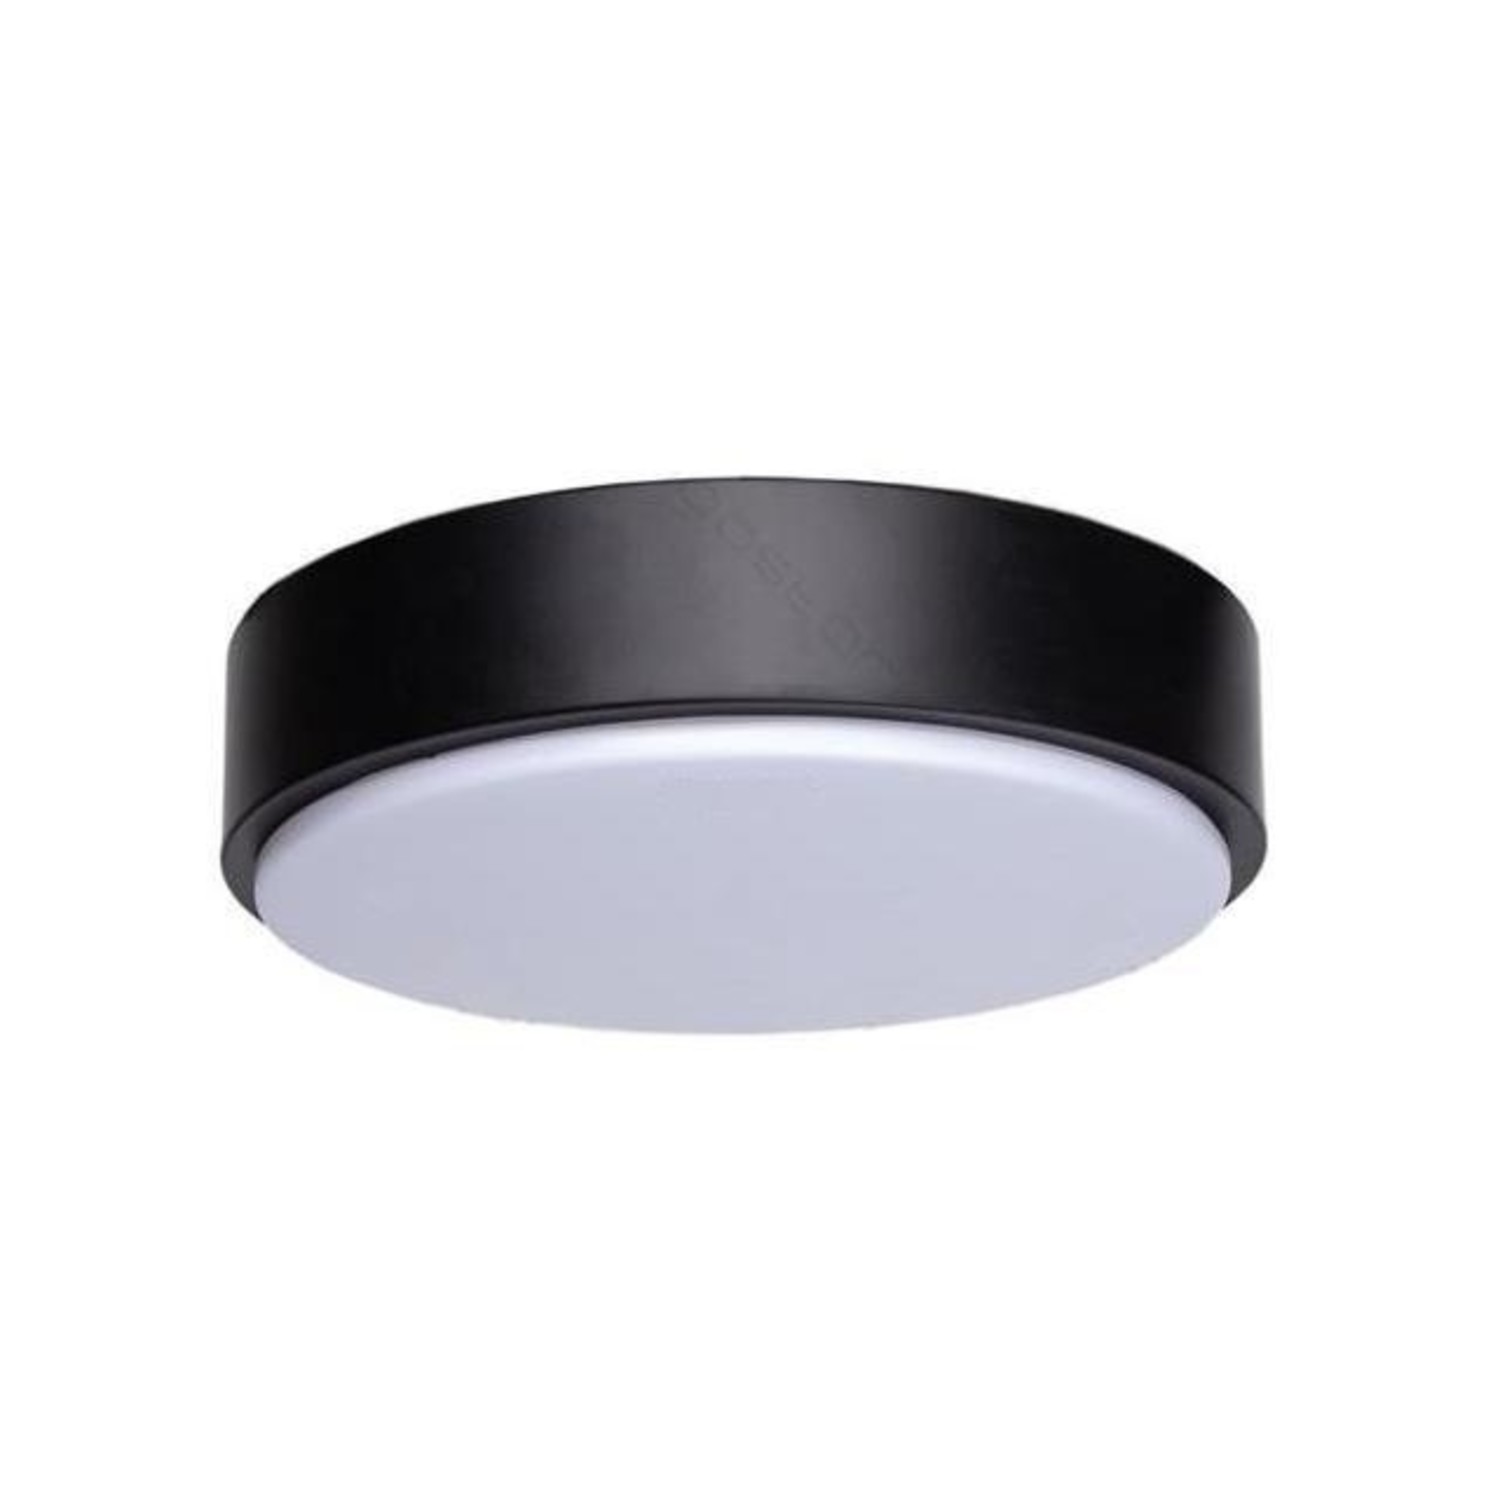 Zwarte plafondlamp vervangt 48W - wit licht 4000K - Ledlichtdiscounter.nl